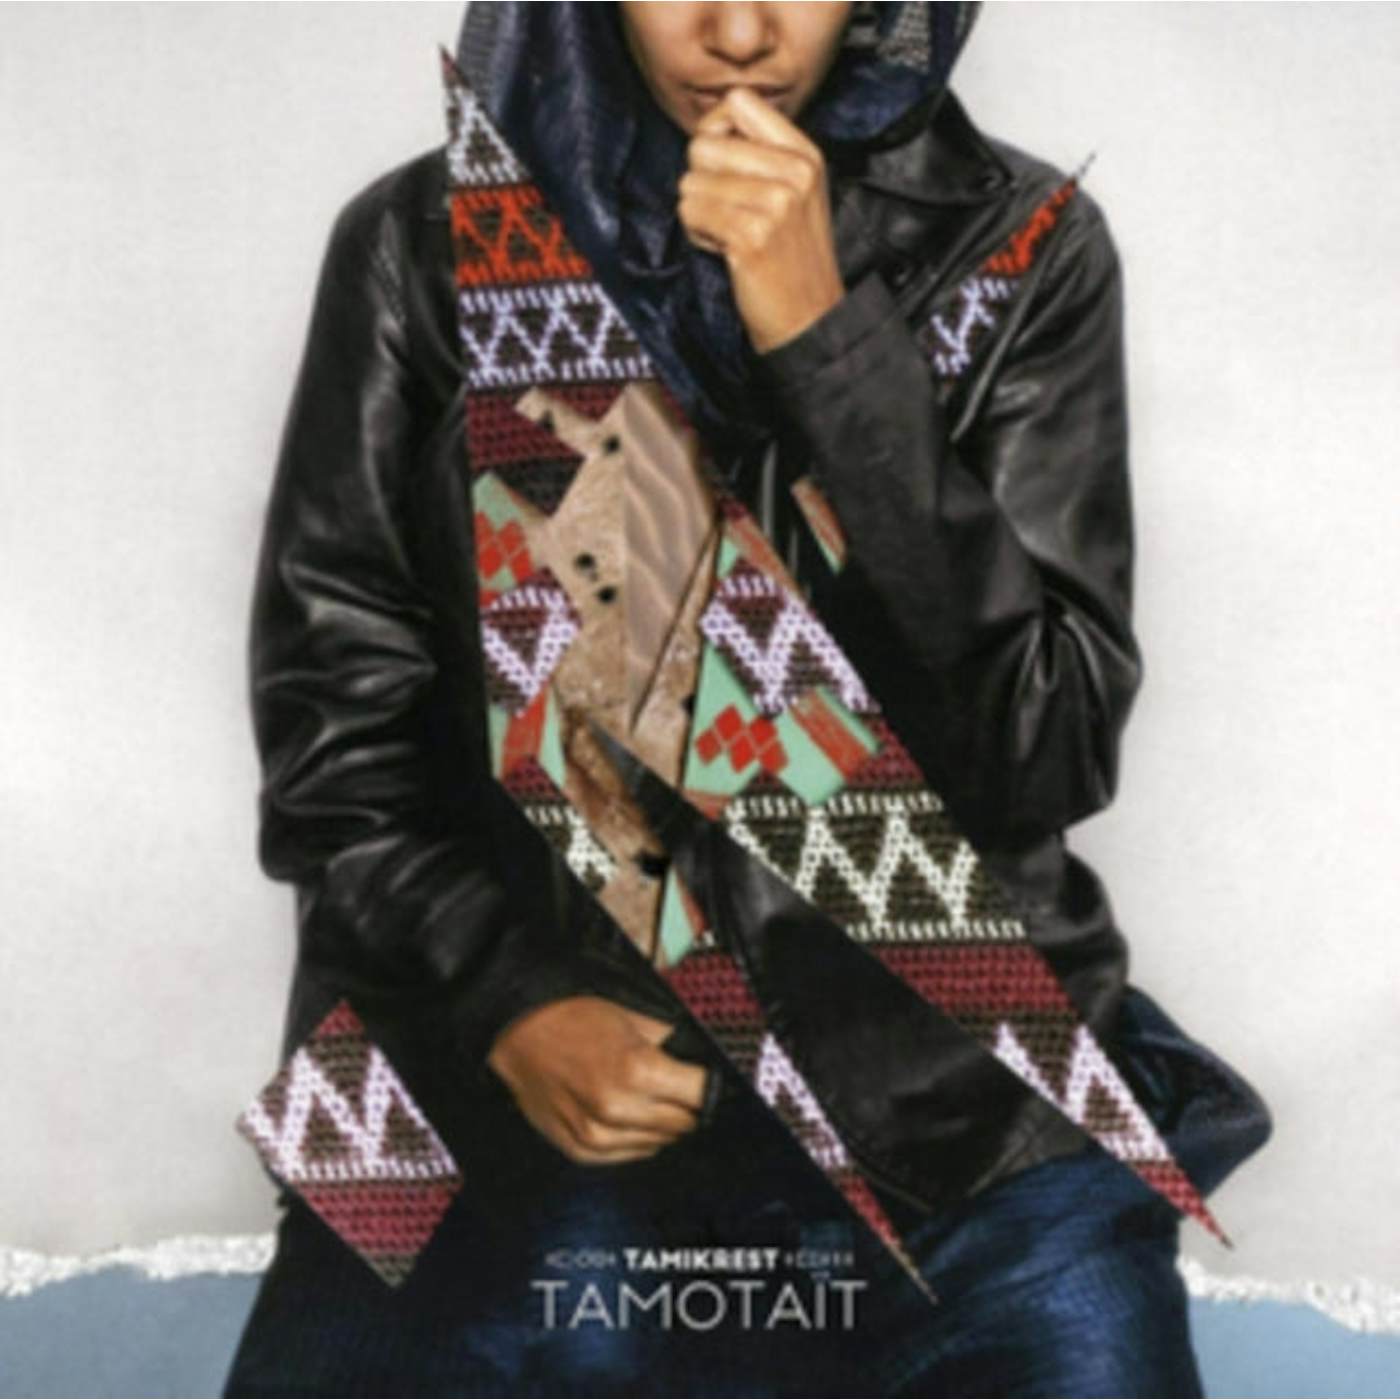 Tamikrest LP - Tamotaït (Vinyl)